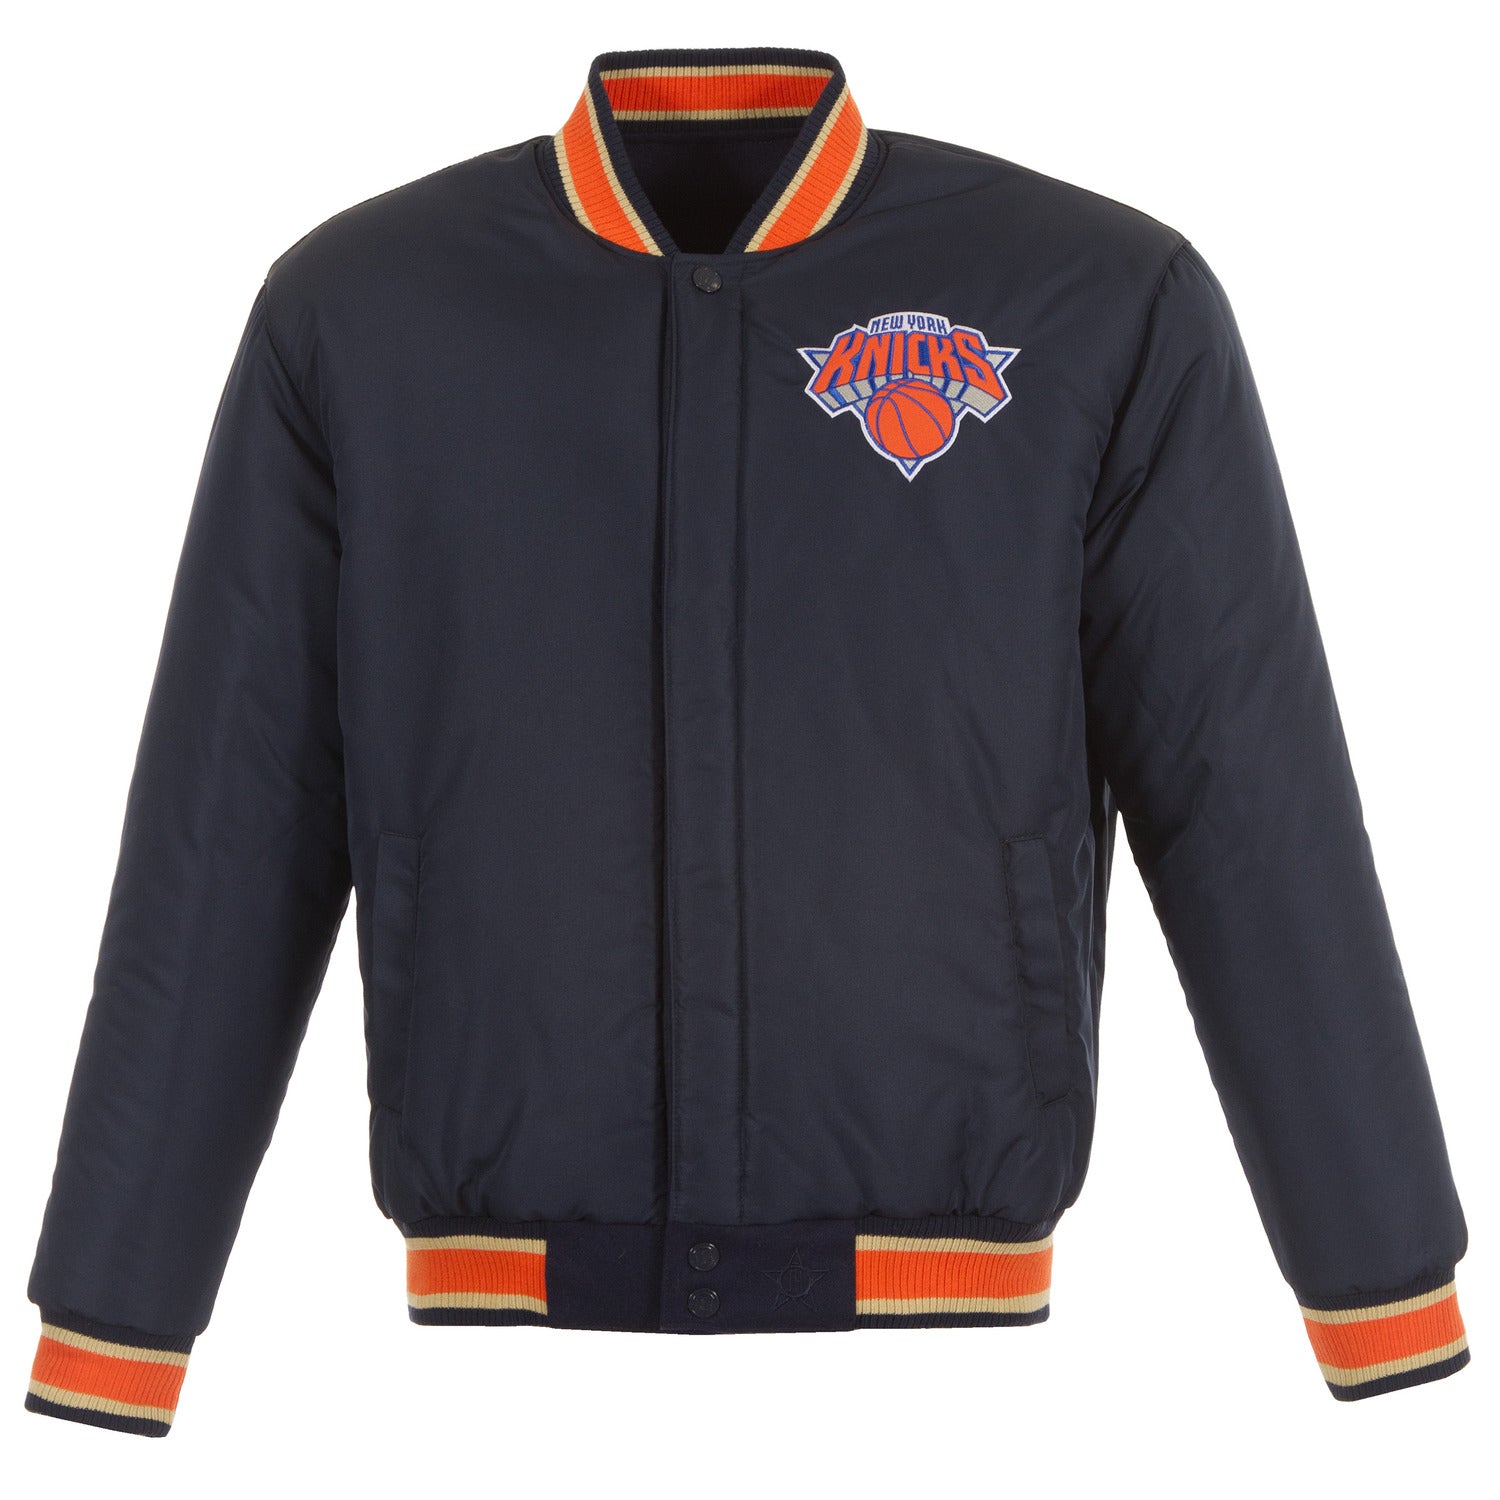 JH Design Knicks Reversible Chenille Wool Jacket - Alternate Front View